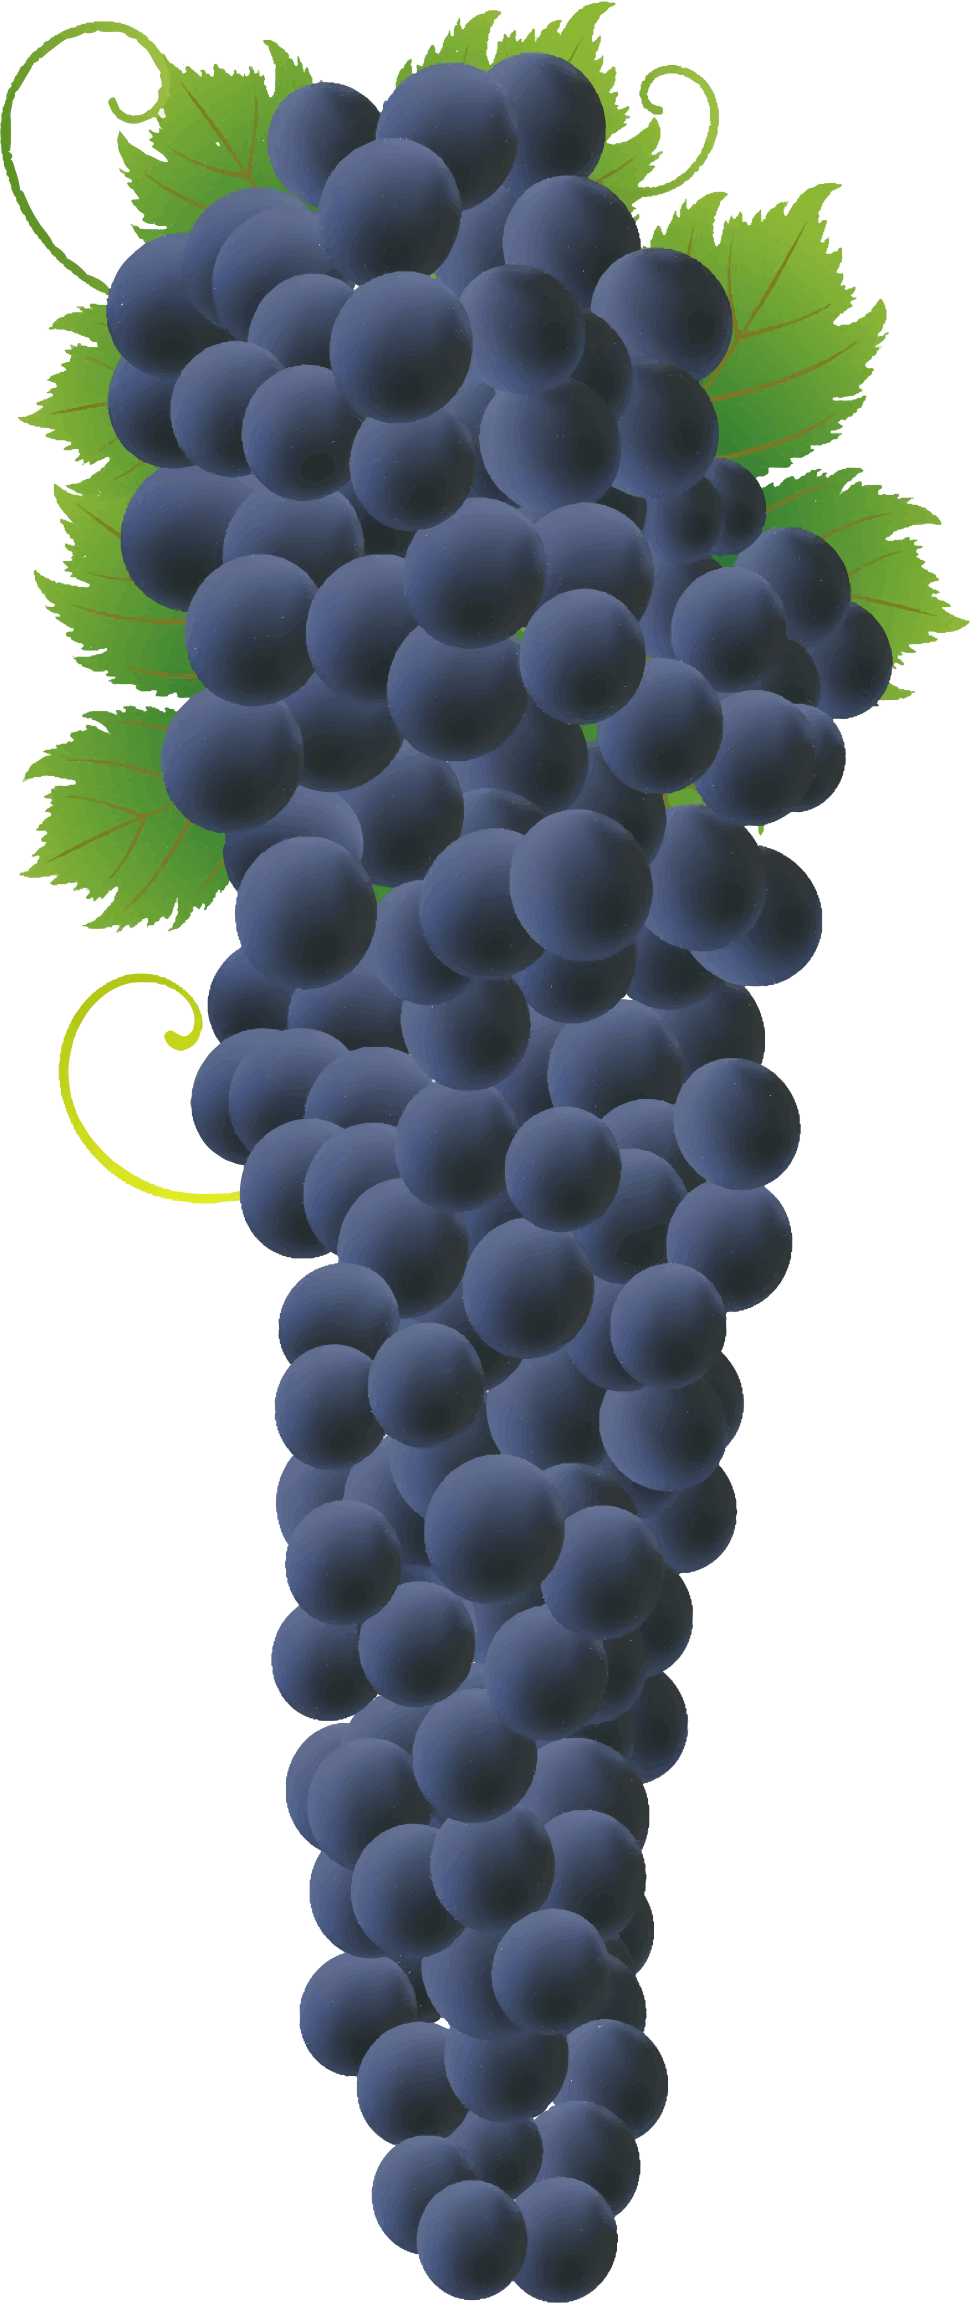 Big Image - Big Bunch Of Grapes (970x2304)